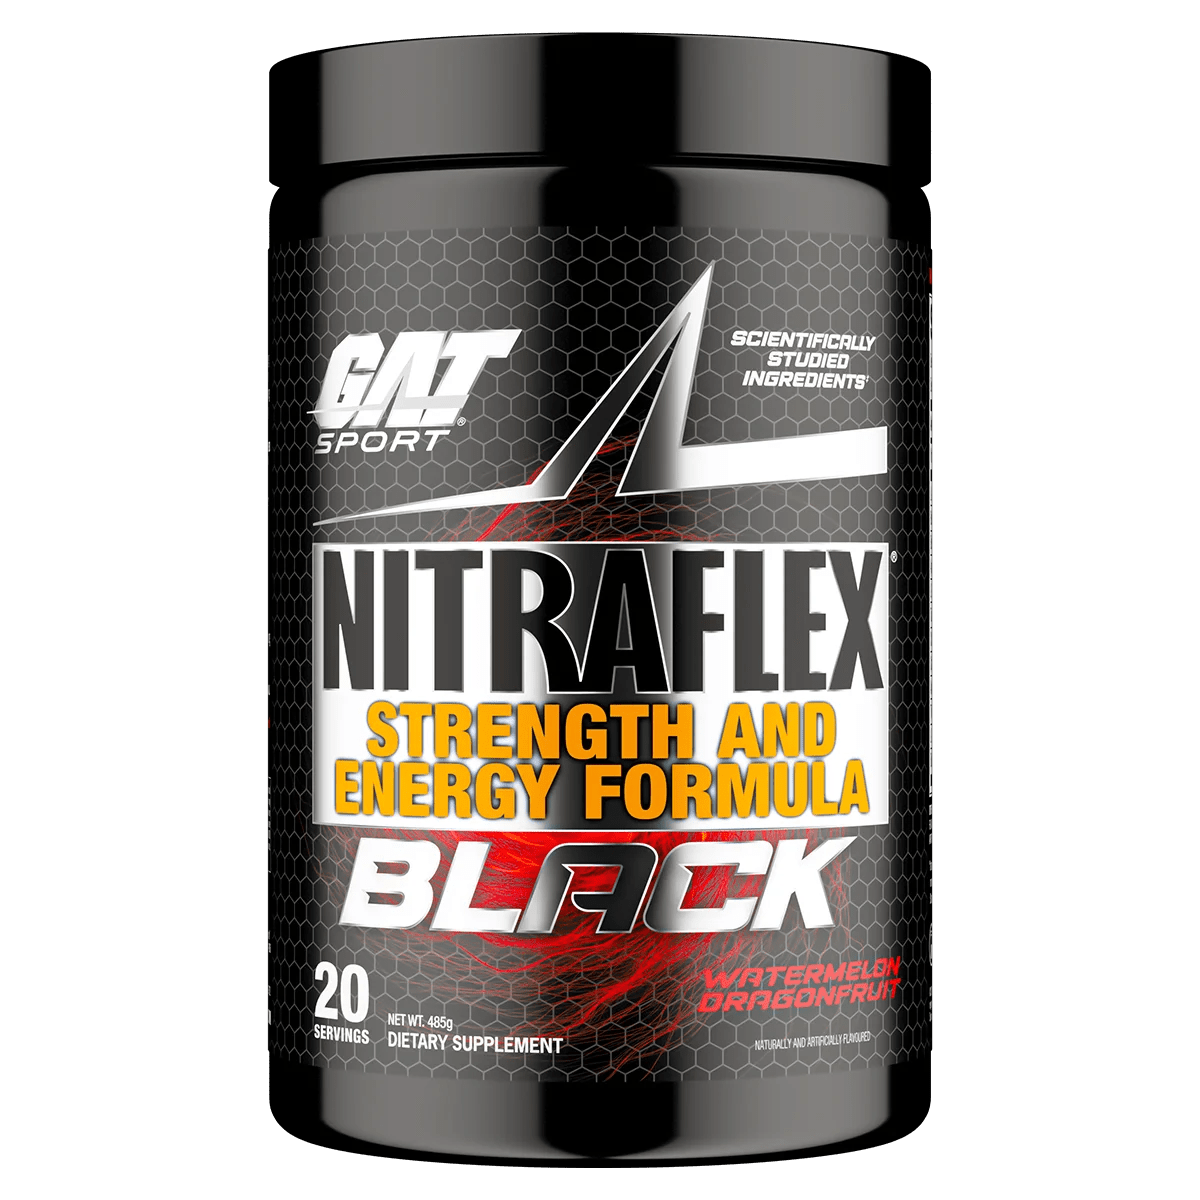 GAT Sport - Nitraflex Black Pre-Workout - 20 Serves - The Cave Gym